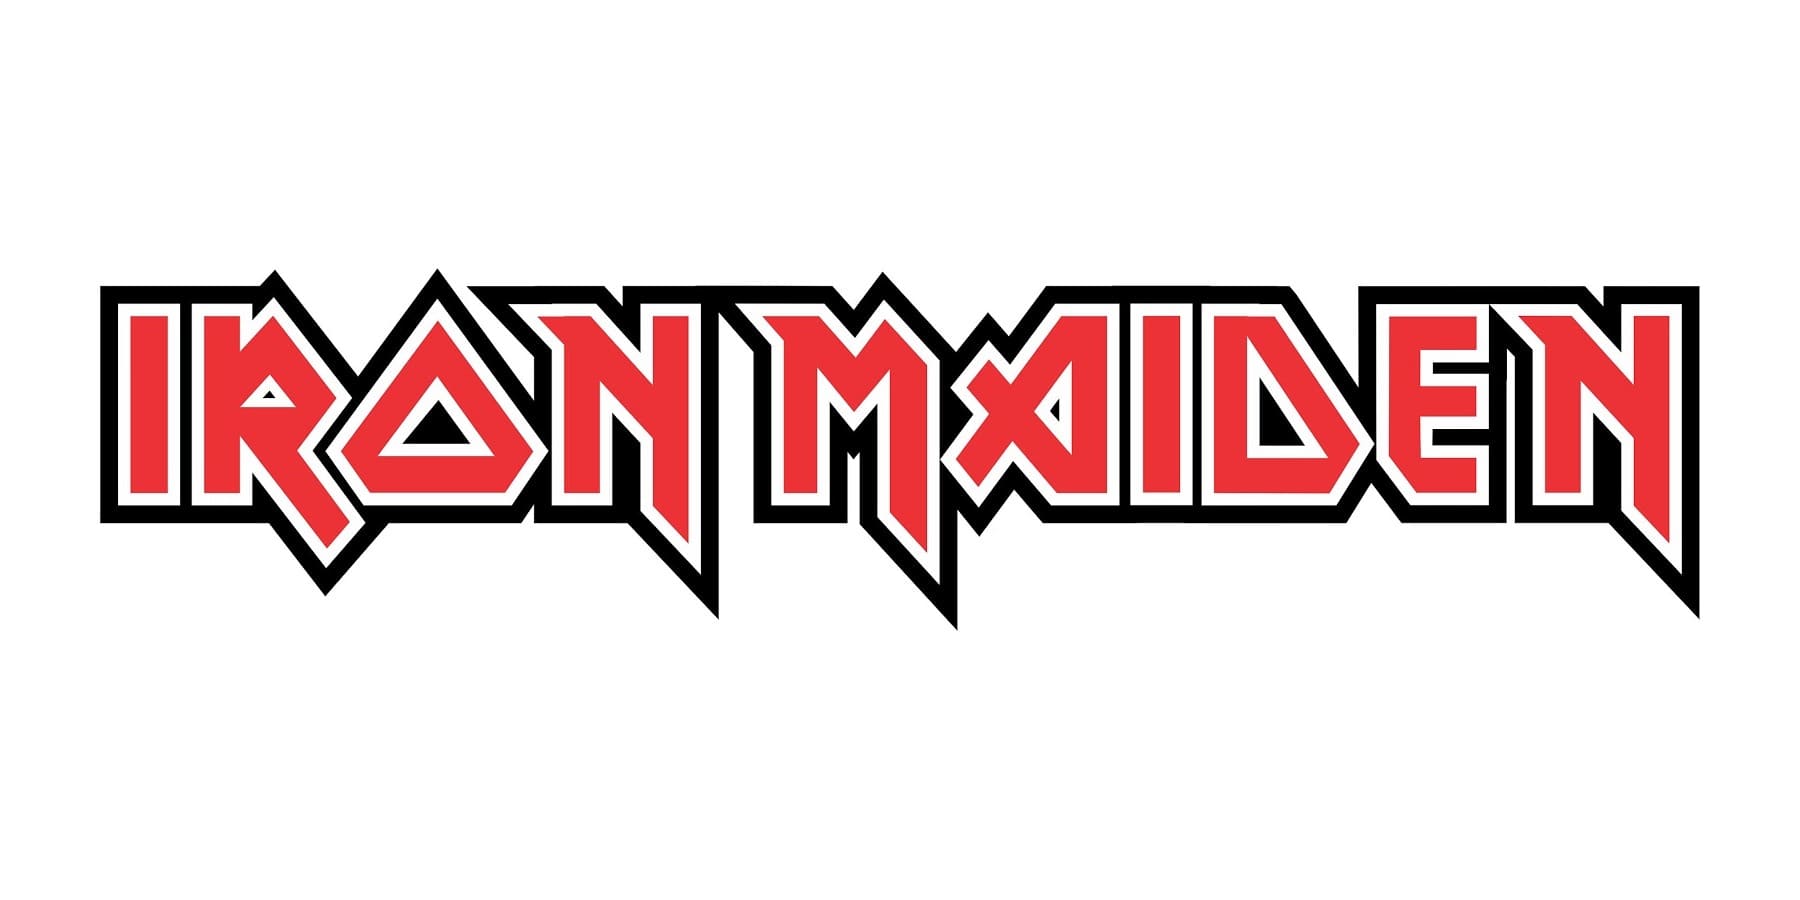 Iron Maiden Logo - Iron Maiden Logo Wallpaper By Gilfordart On ...